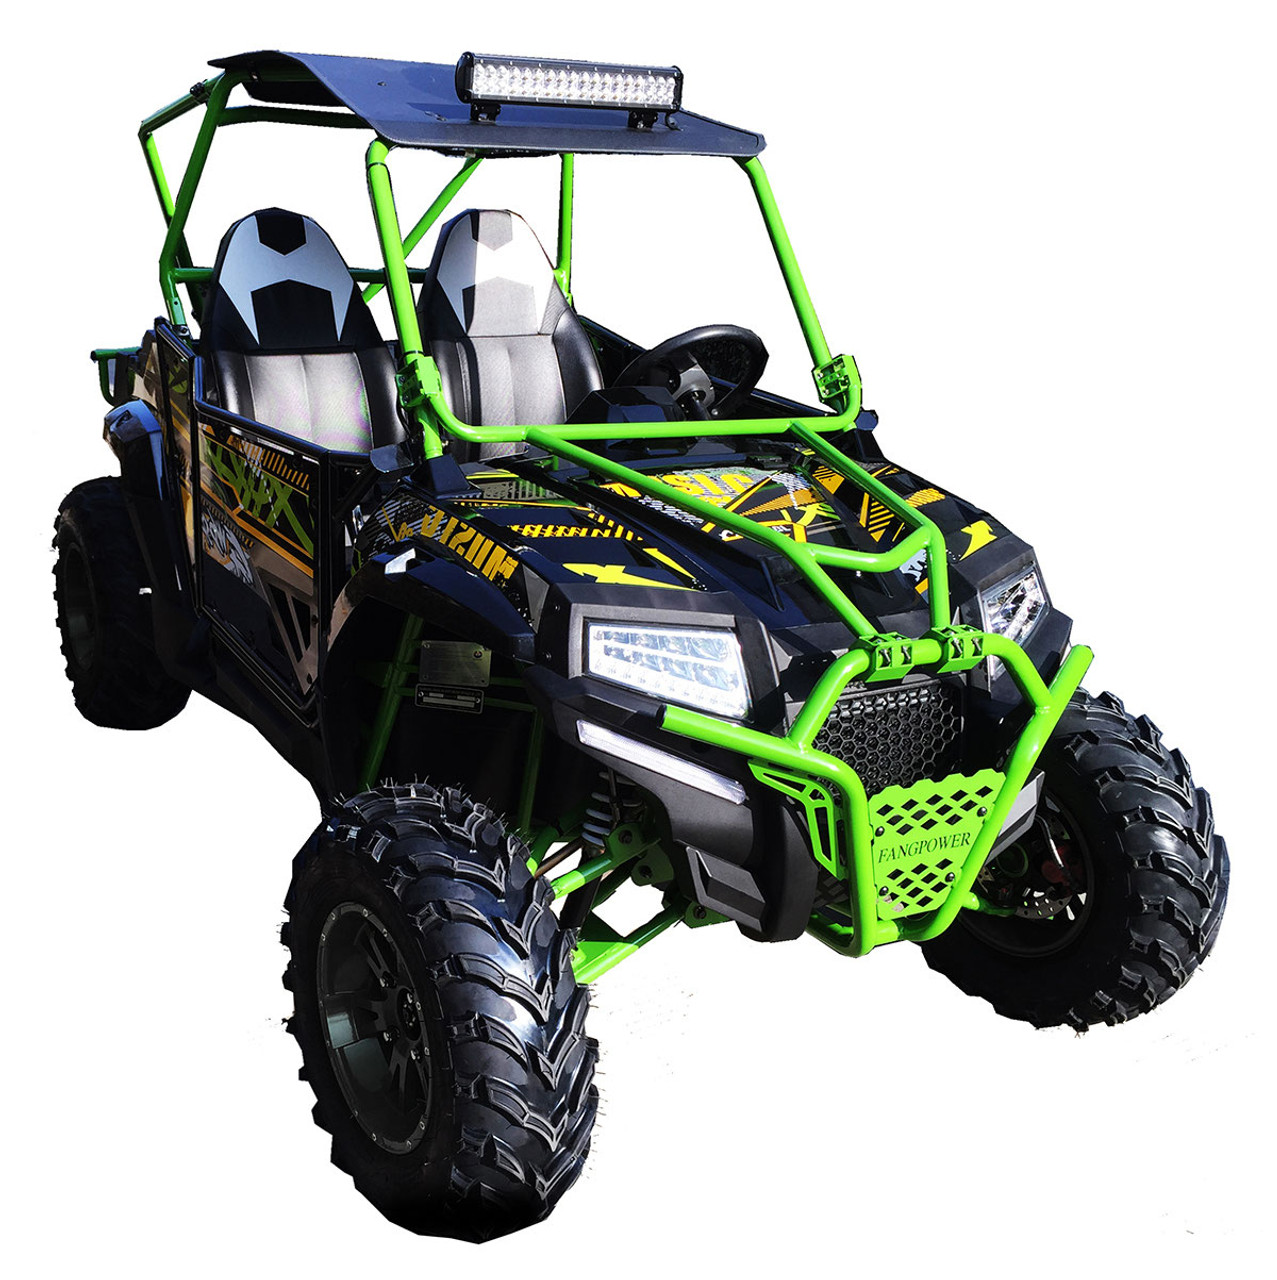 Vitacci -ATL Predator FX400 UTV, 311.4CC, Alloy Black Wheels, LED Light, 4-Stroke,Single-Cylinder, Water-Cooled - Green